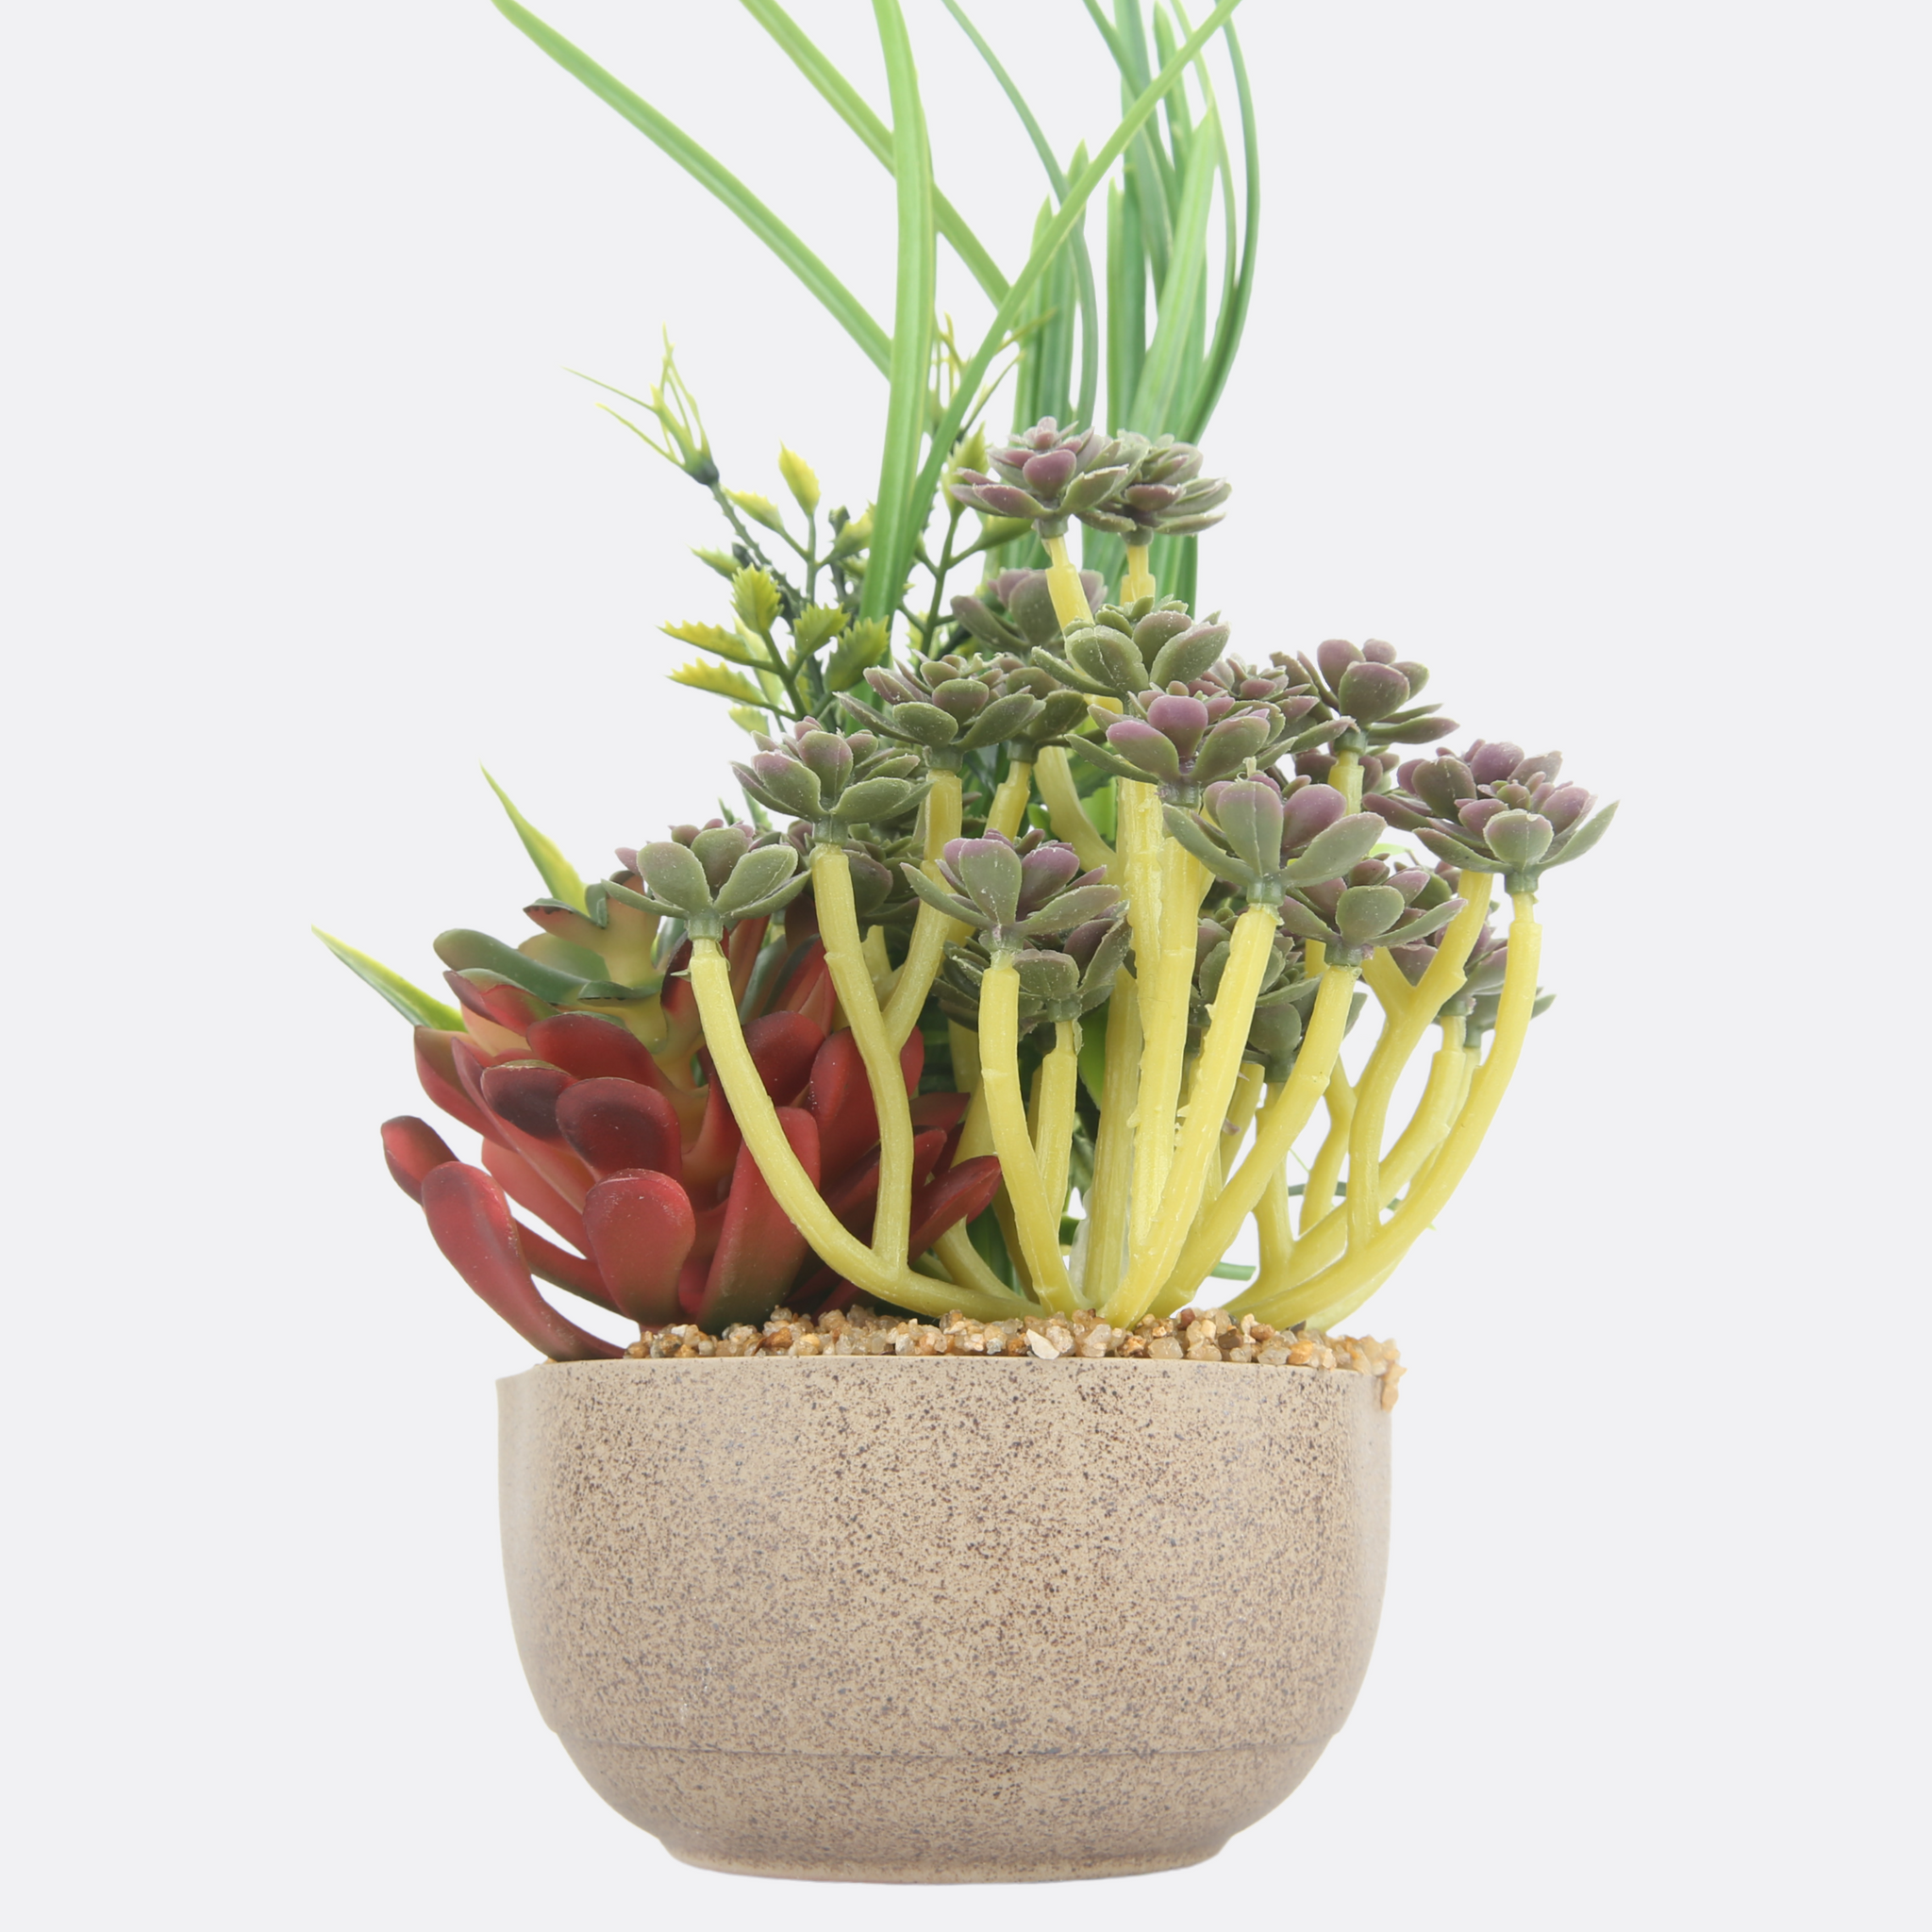 Abstract Plant Arrangement With Ductile Pot